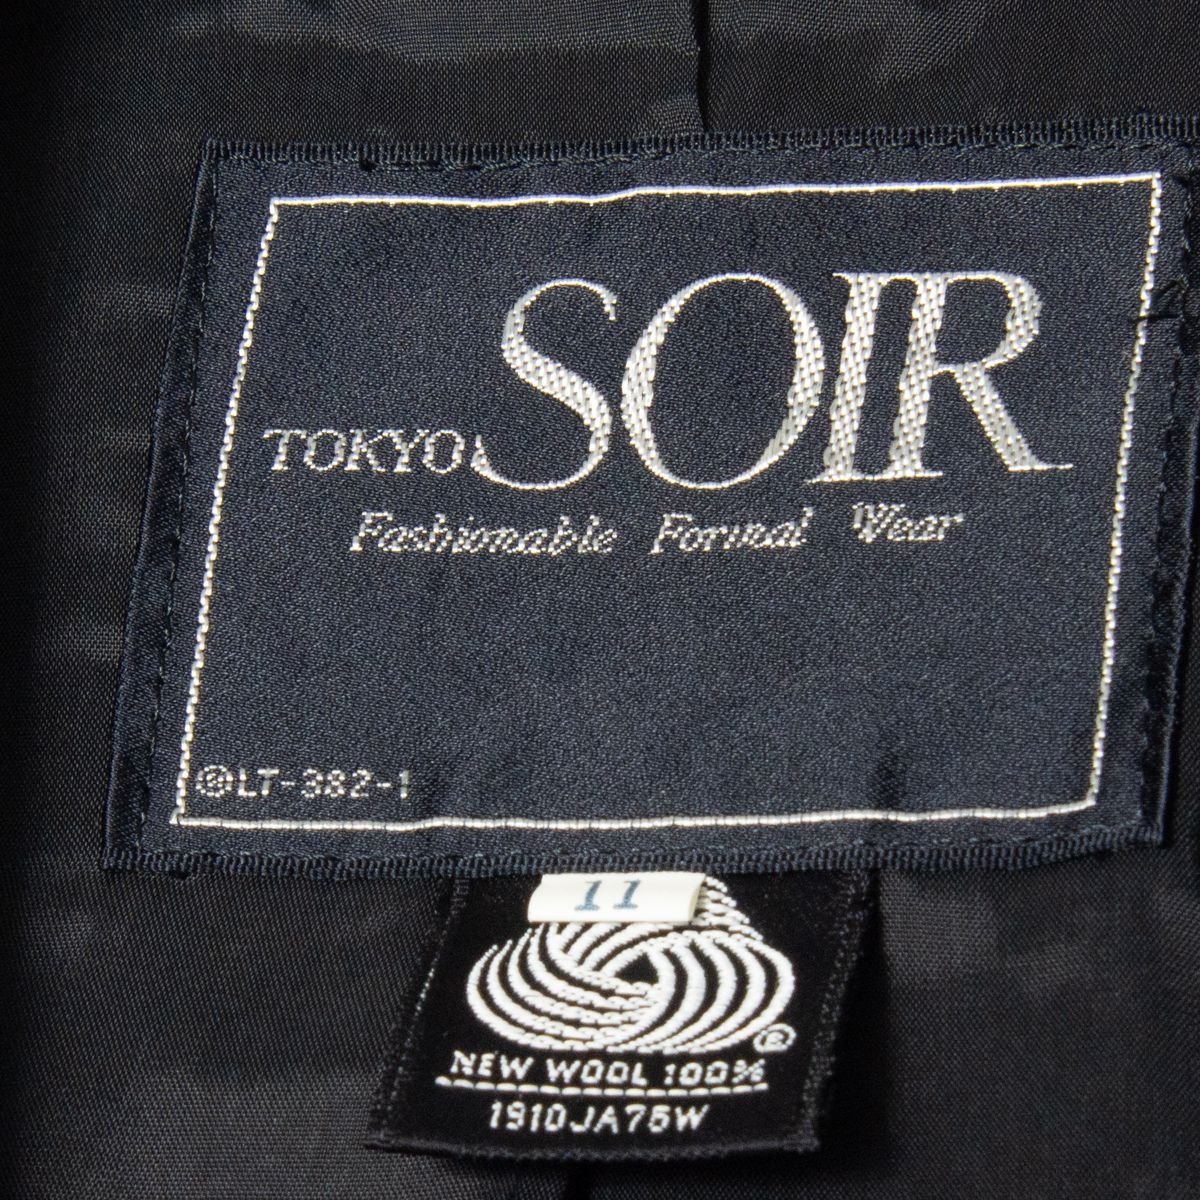 TOKYO SOIR Tokyo sowa-ru tailored jacket shoulder pad wool 100% formal party classical black black autumn winter 11 plain 